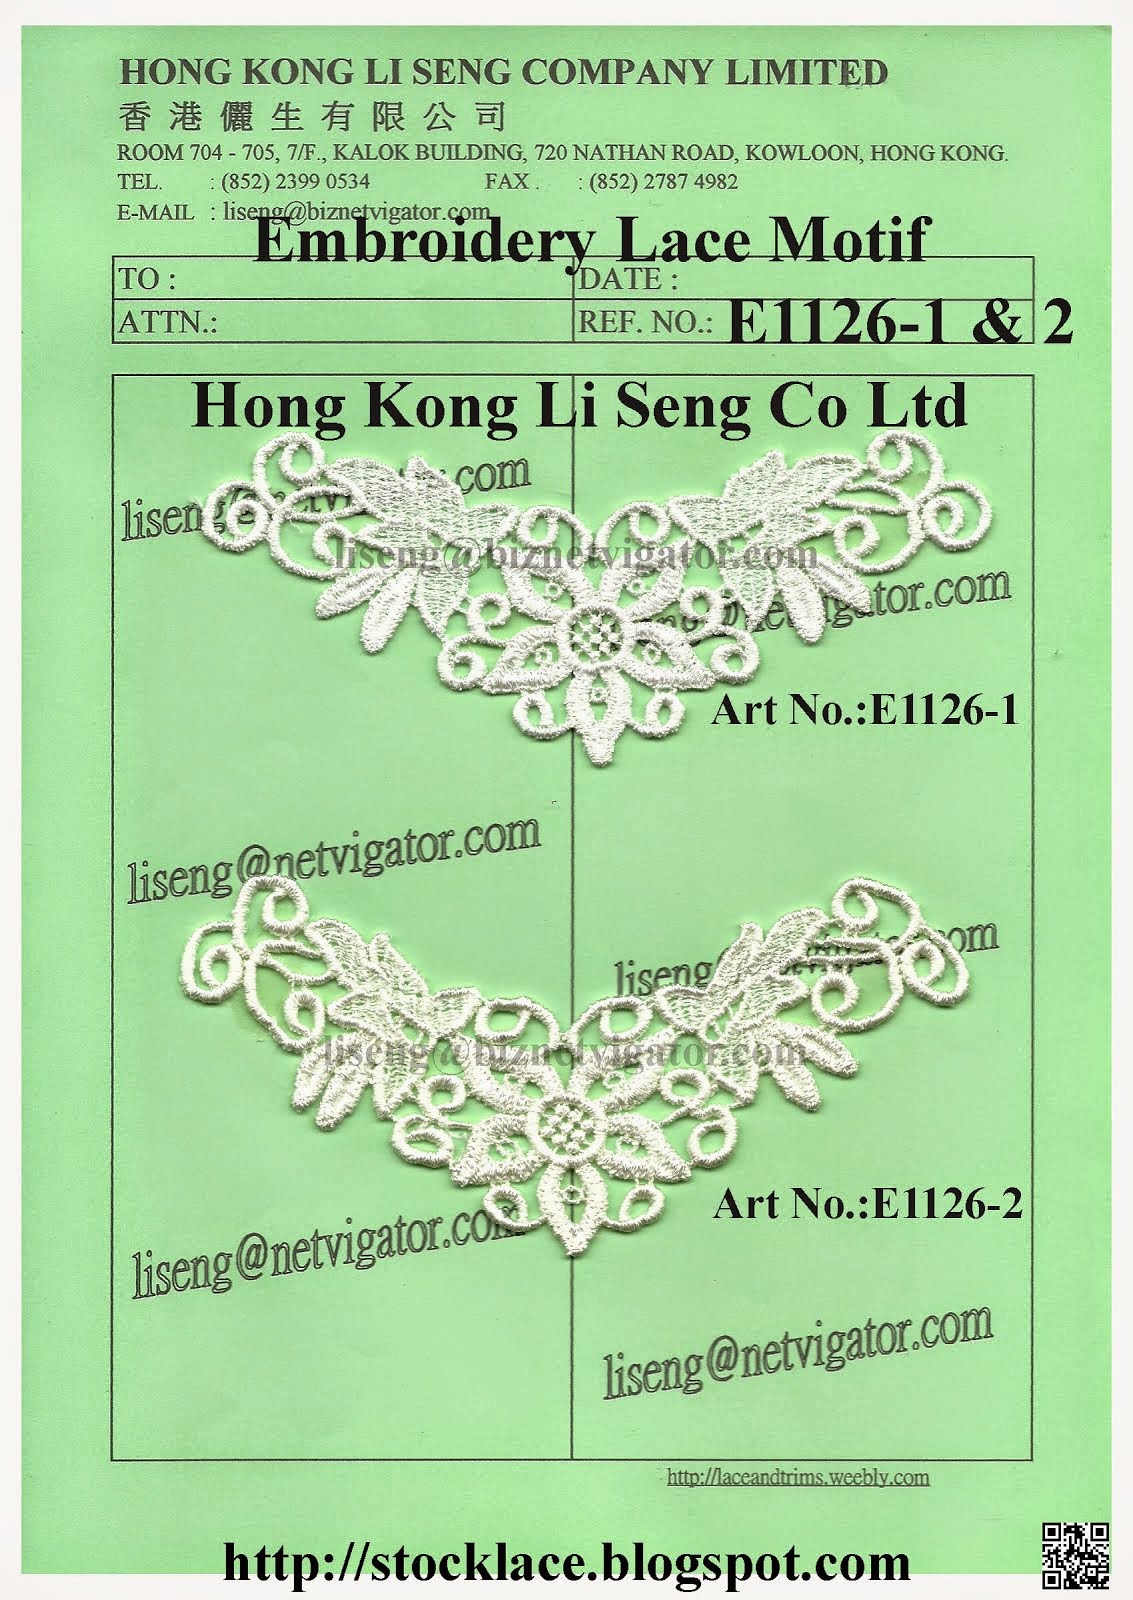 New Stock Embroidery Lace Motif Manufacturer, Wholesale and Supplier - Hong Kong Li Seng Co Ltd